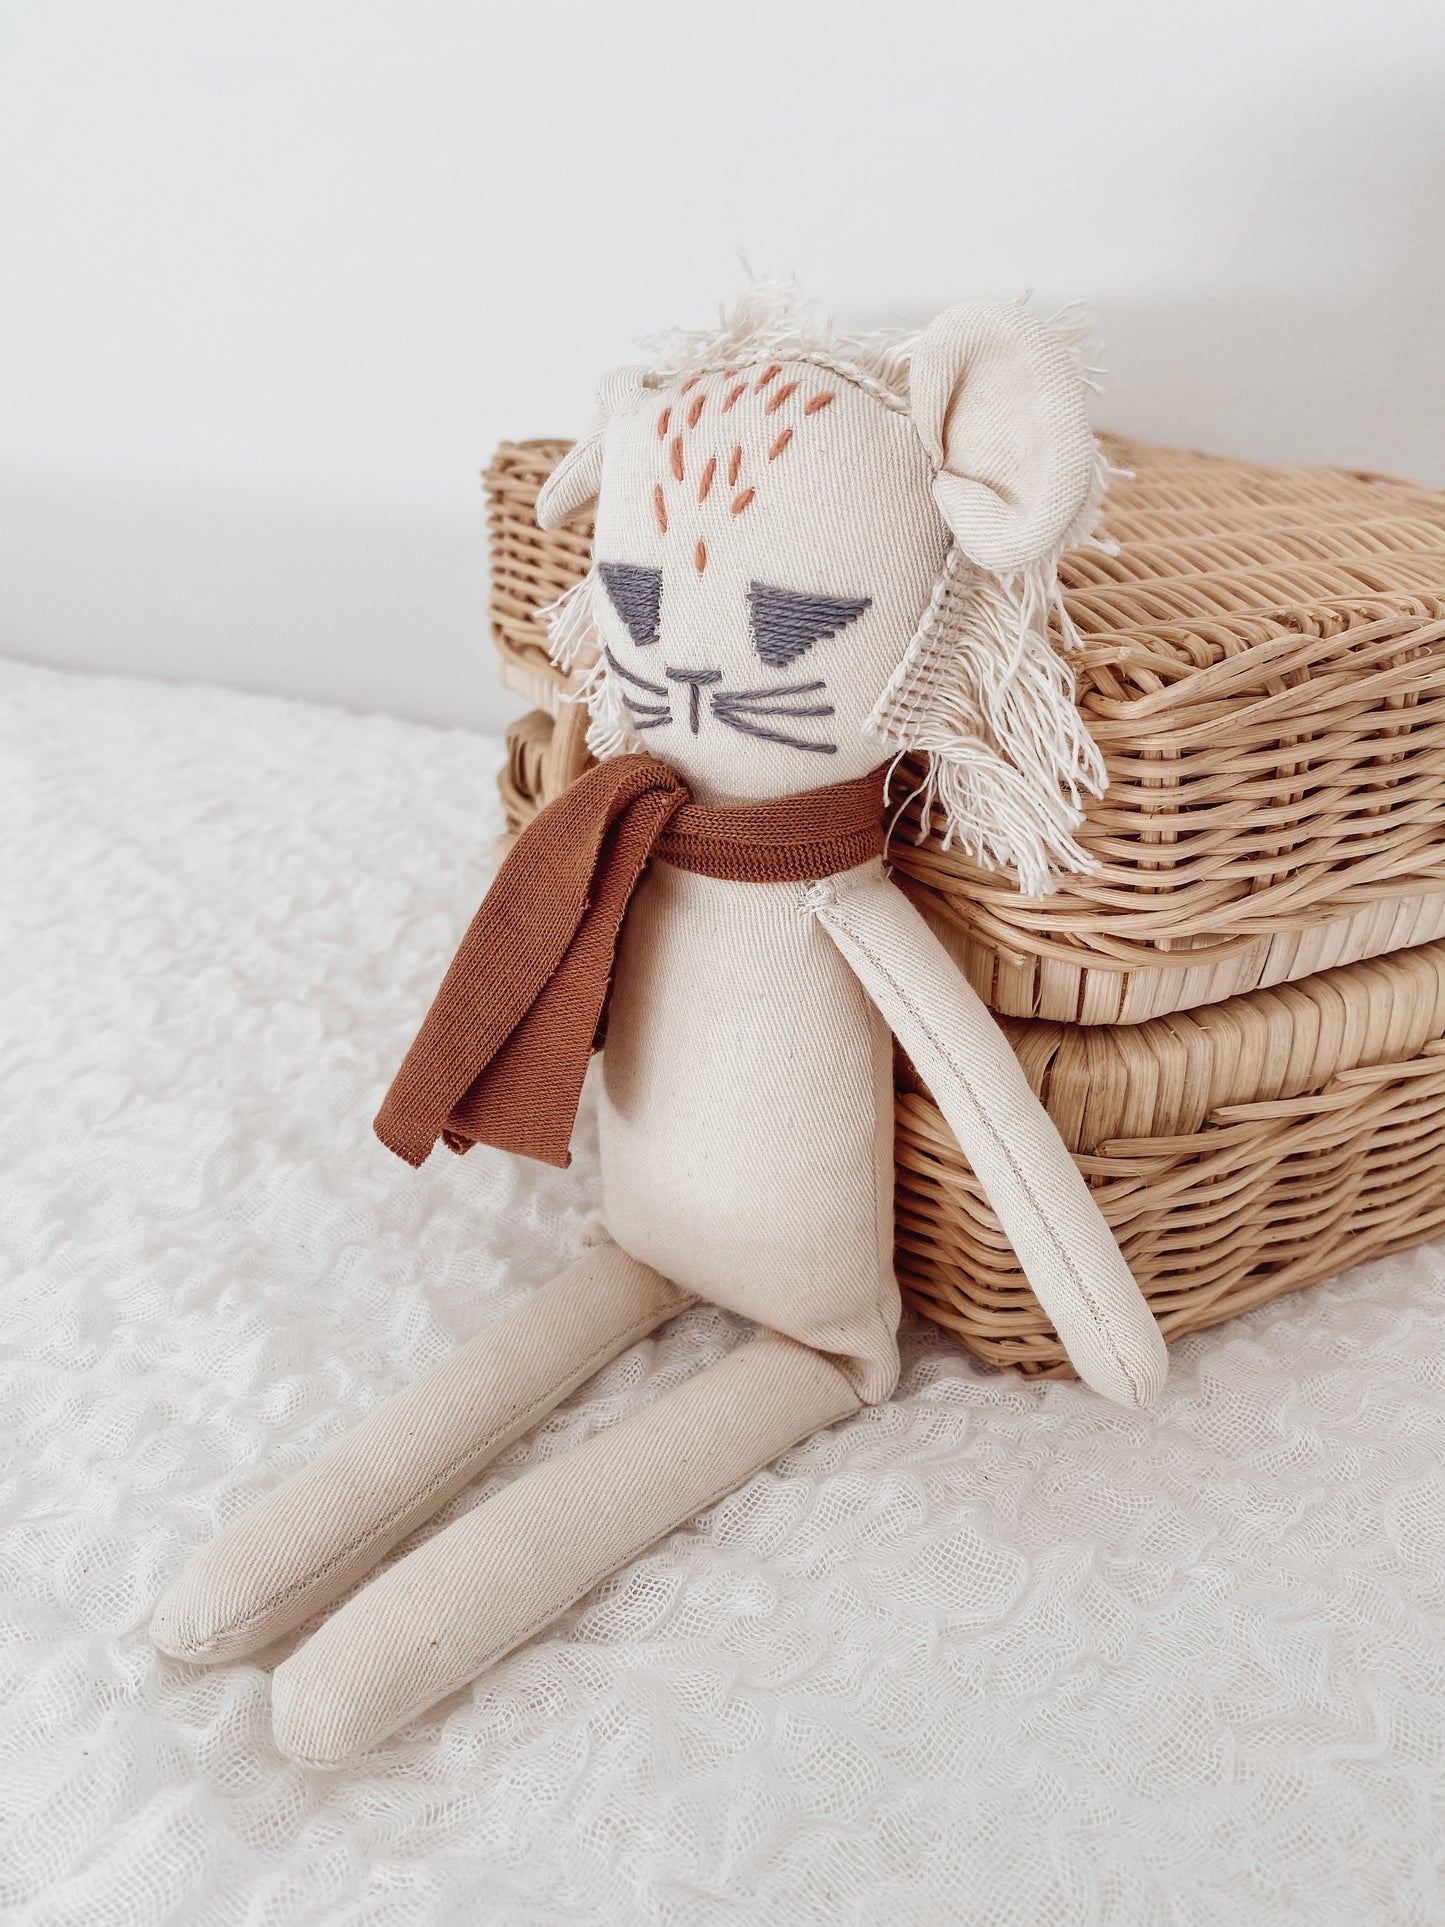 Lion - handmade plush toy